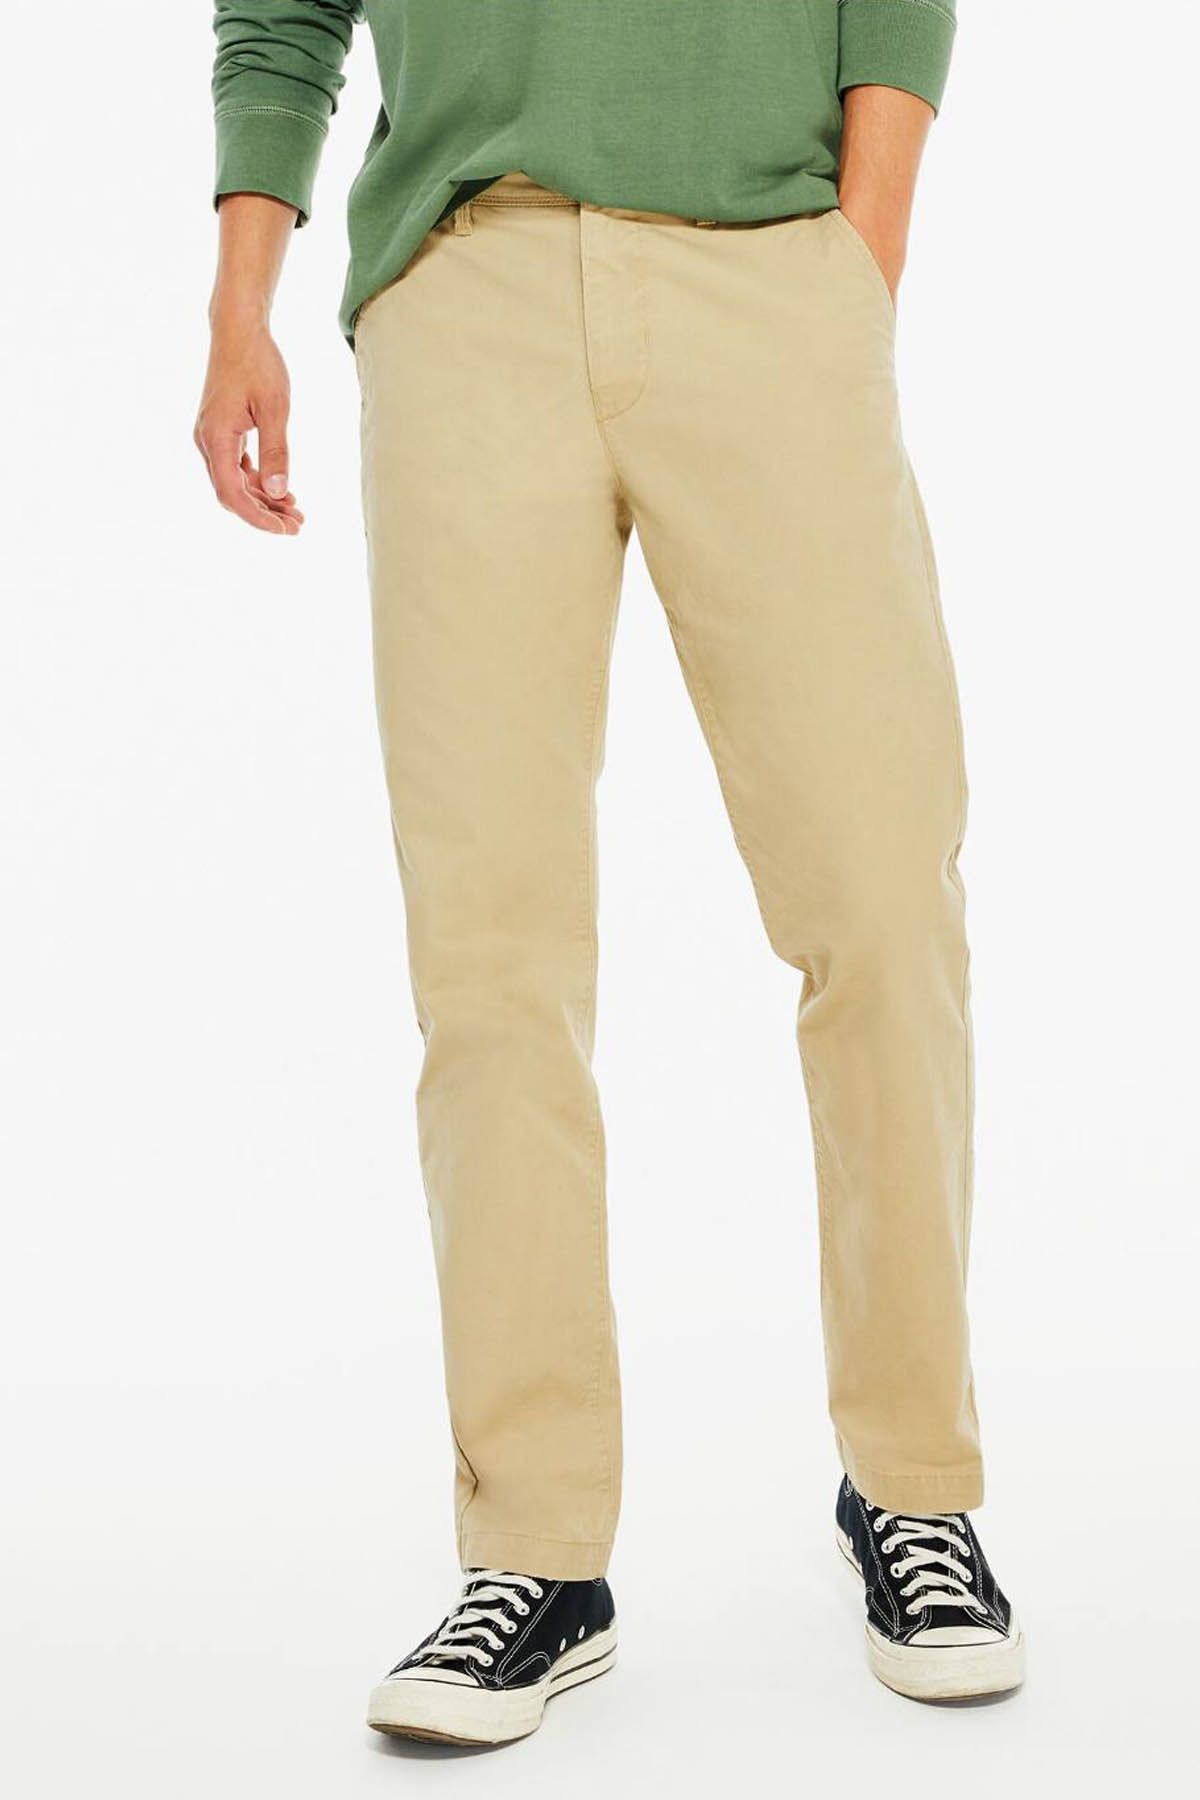 Buy AEROPOSTALE Mens Slim Straight Casual Chino Pants at Amazon.in